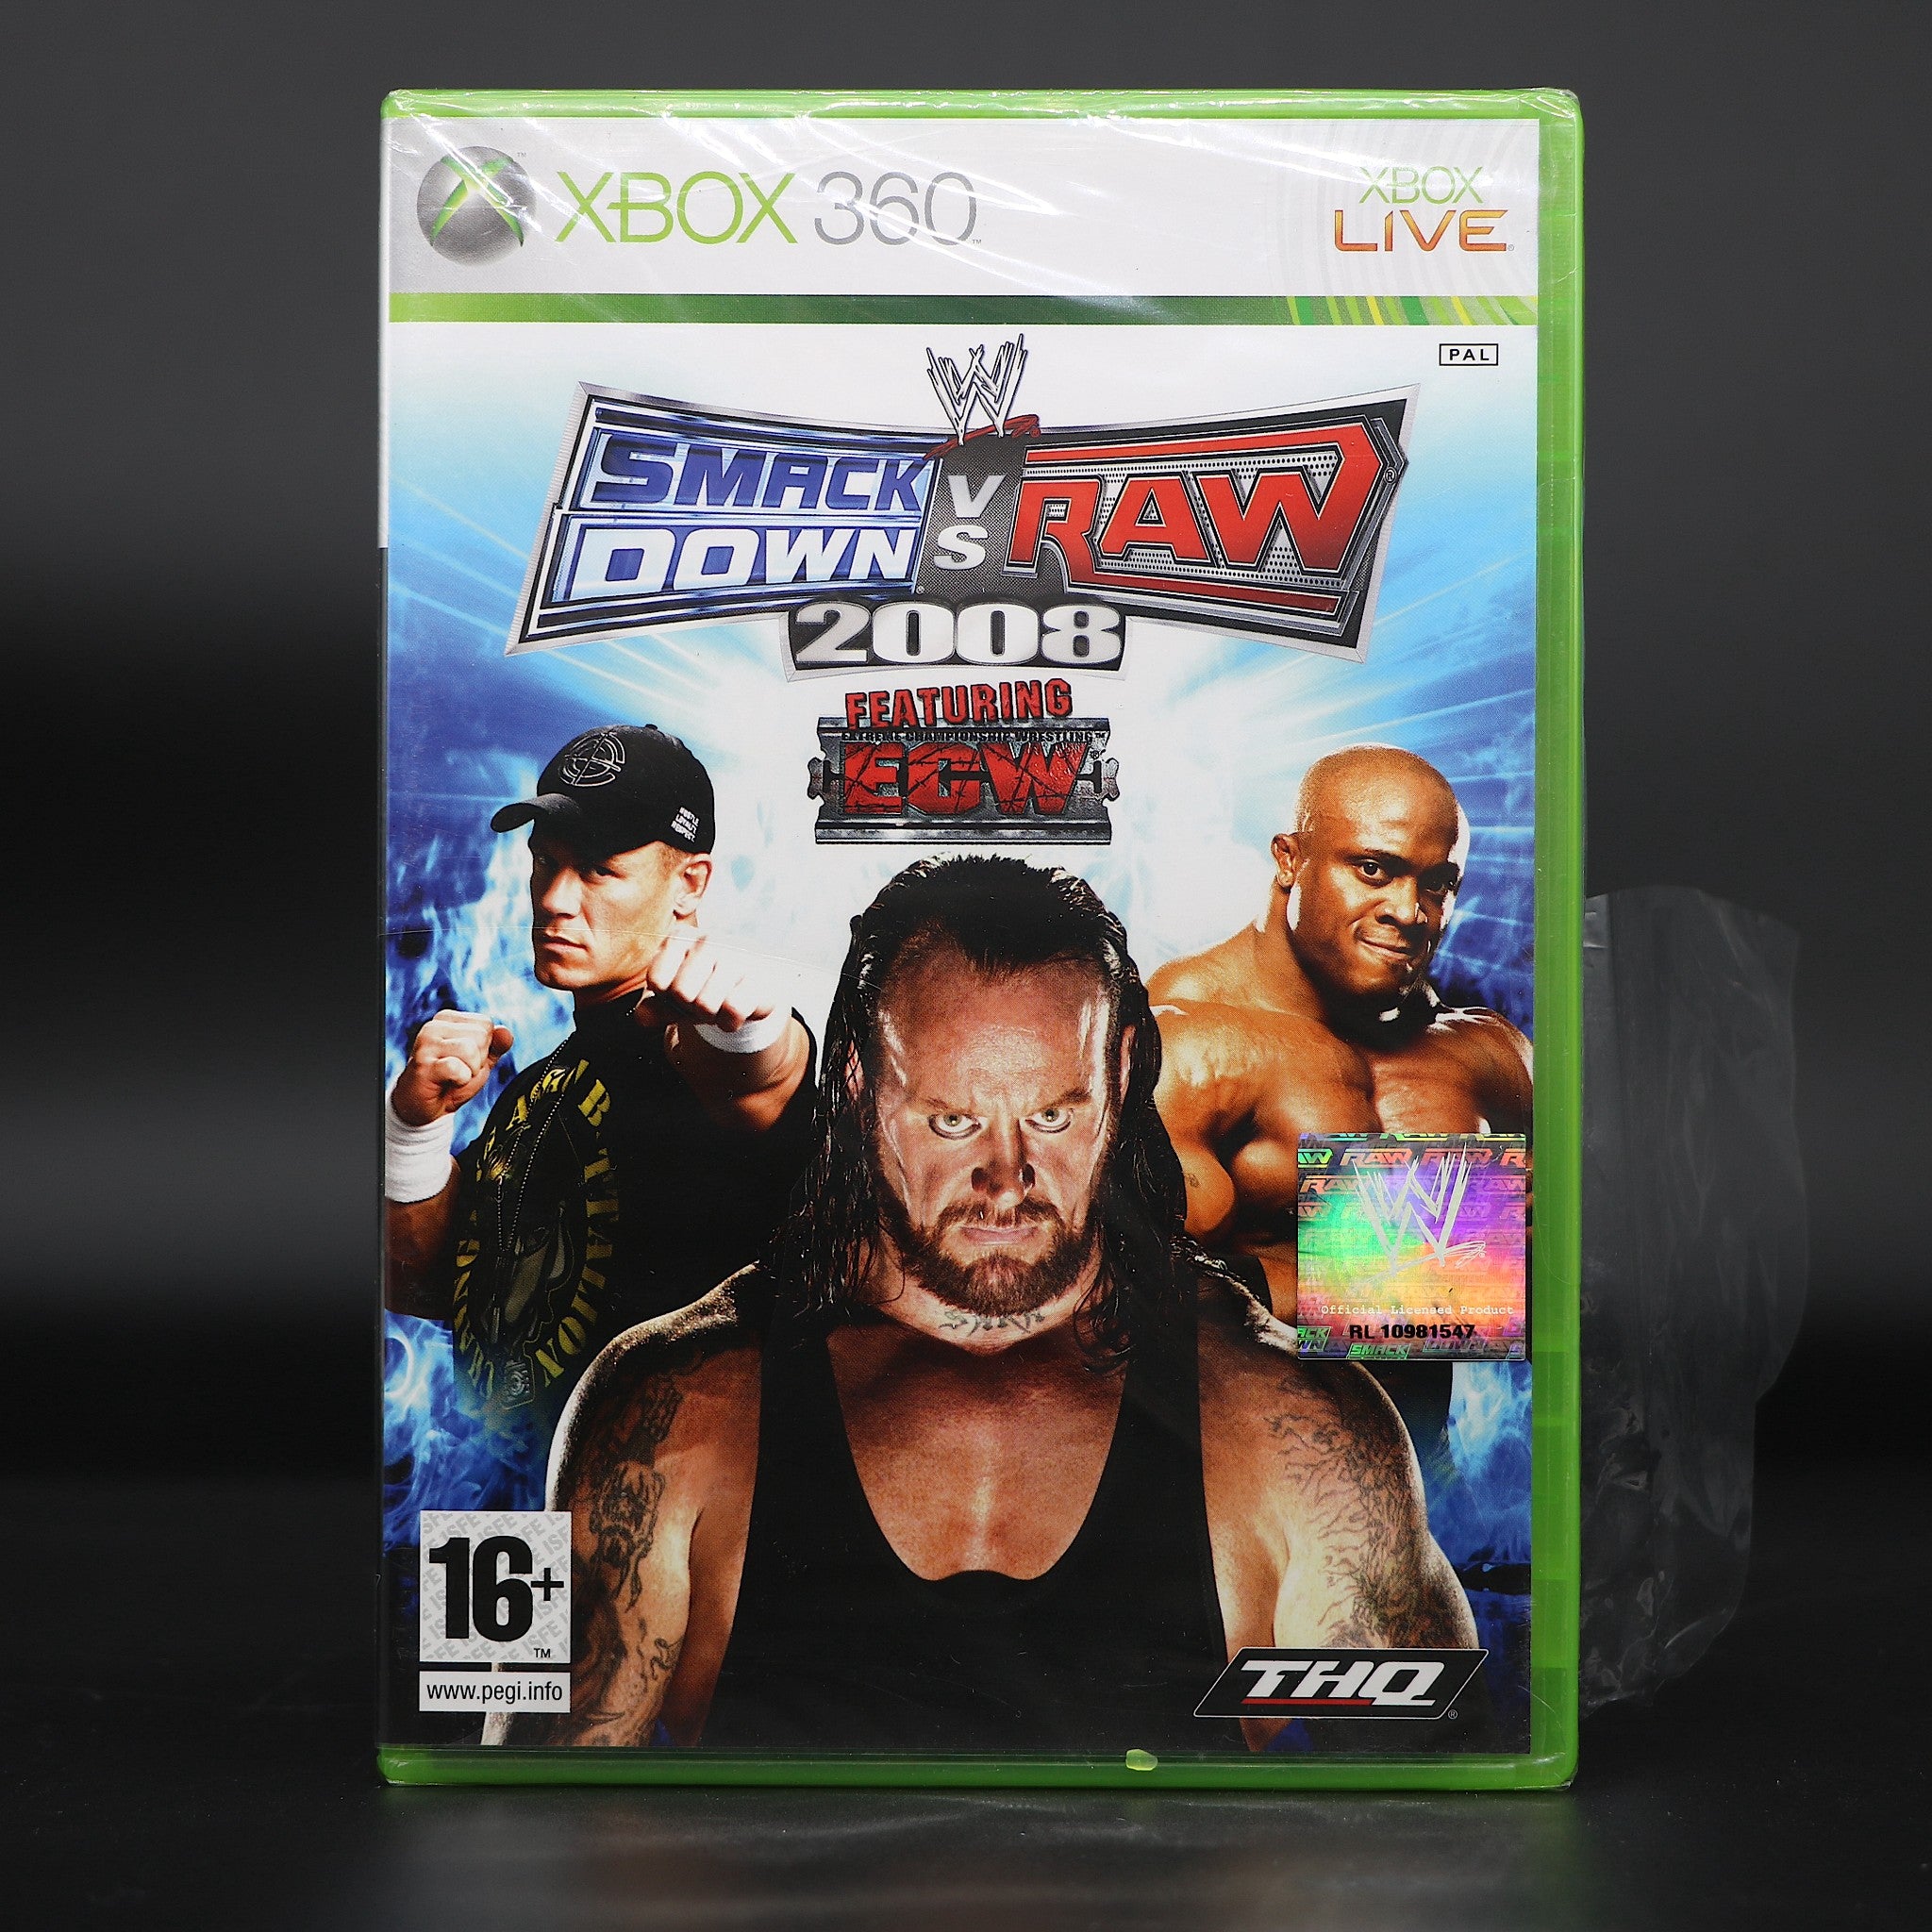 WWE Smackdown VS Raw 2008 | Wrestling | Microsoft Xbox 360 Game | New Torn Seal